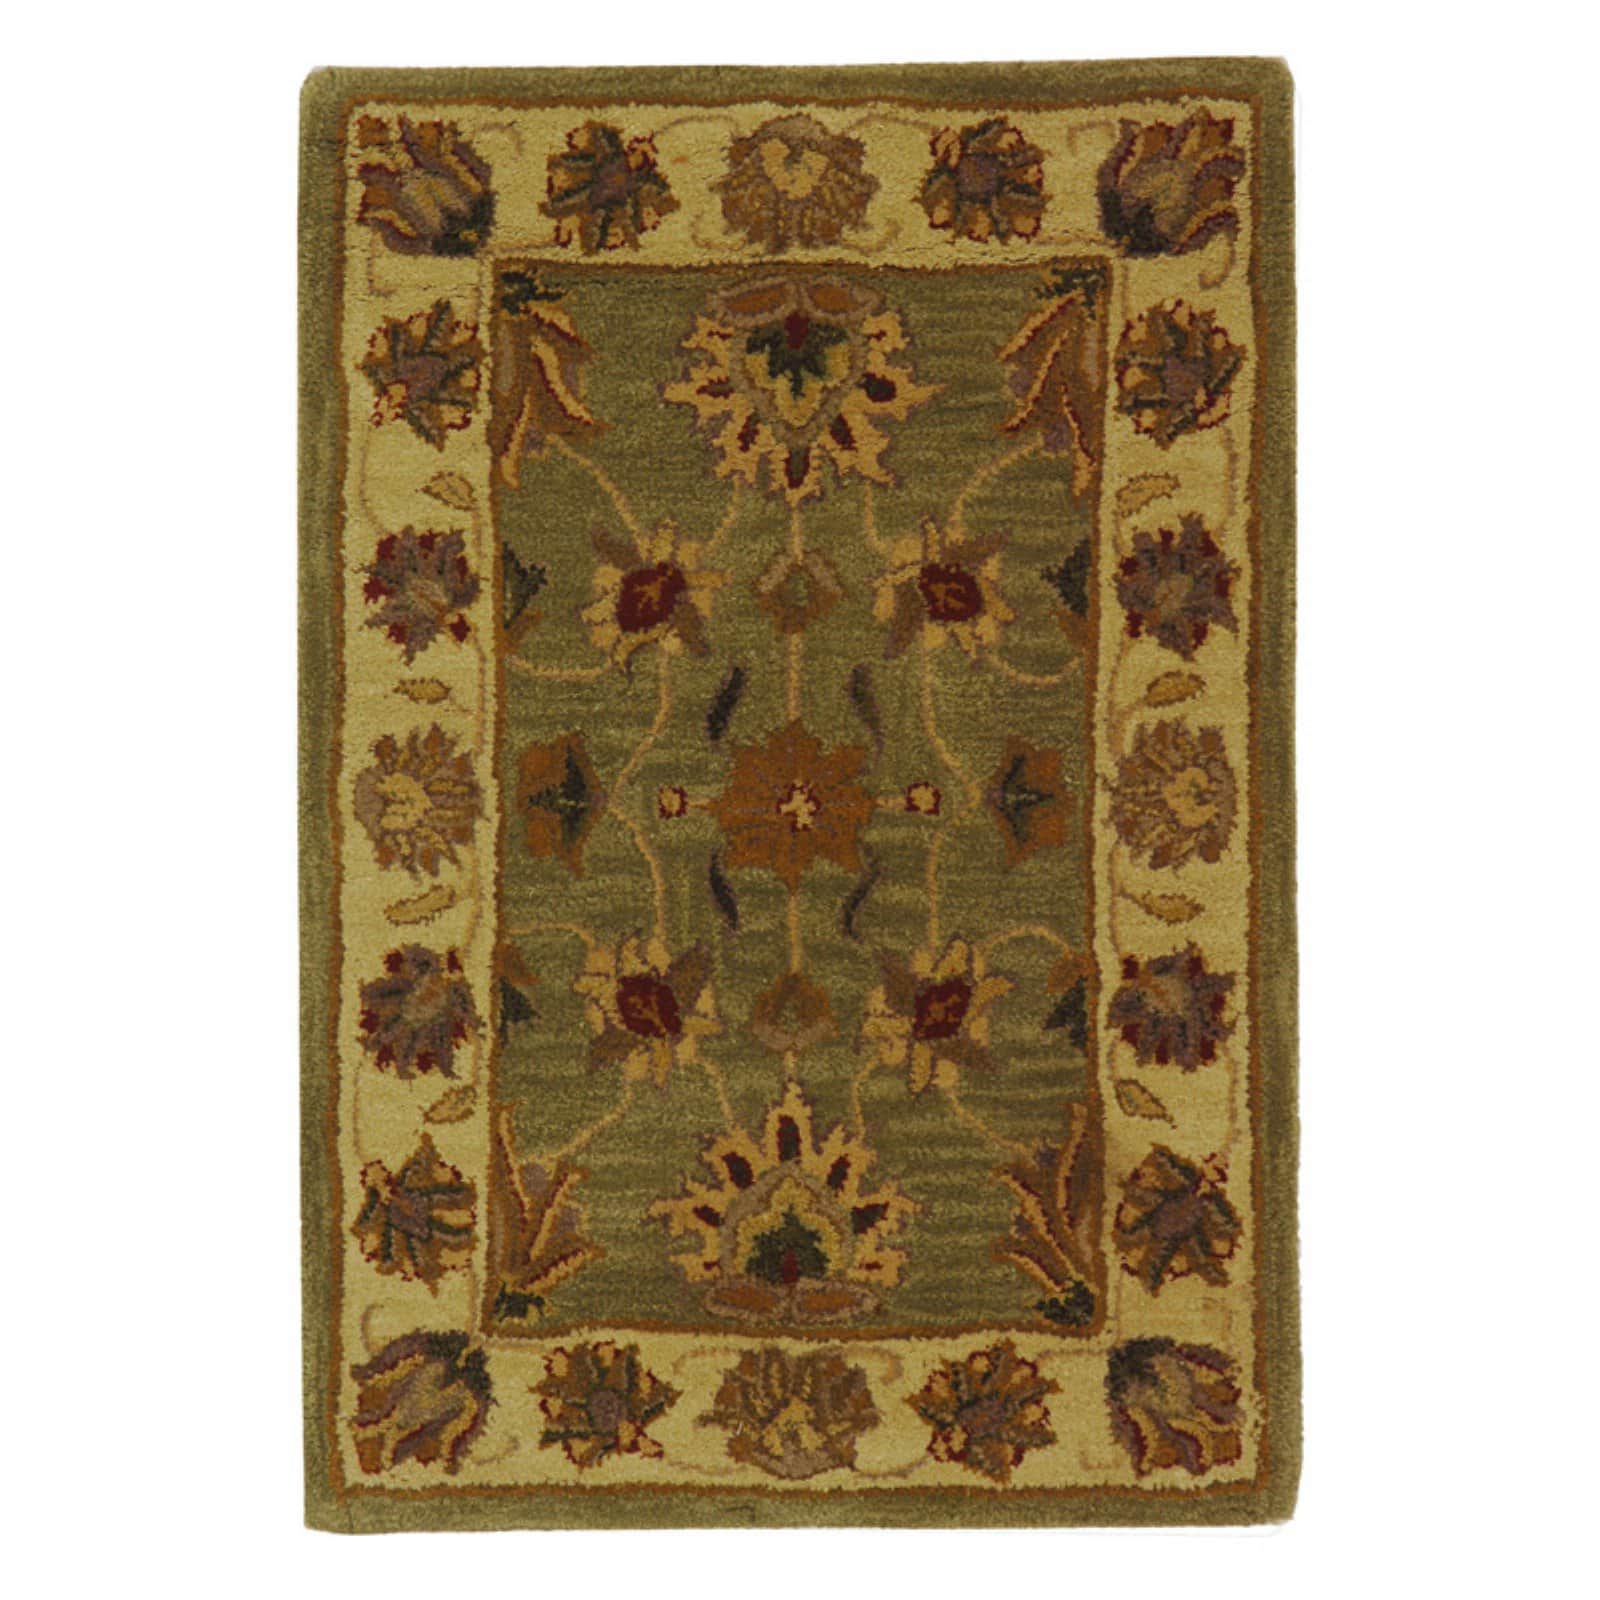 SAFAVIEH Heritage Regis Traditional Wool Area Rug, Green/Gold, 5' x 8' - image 2 of 10